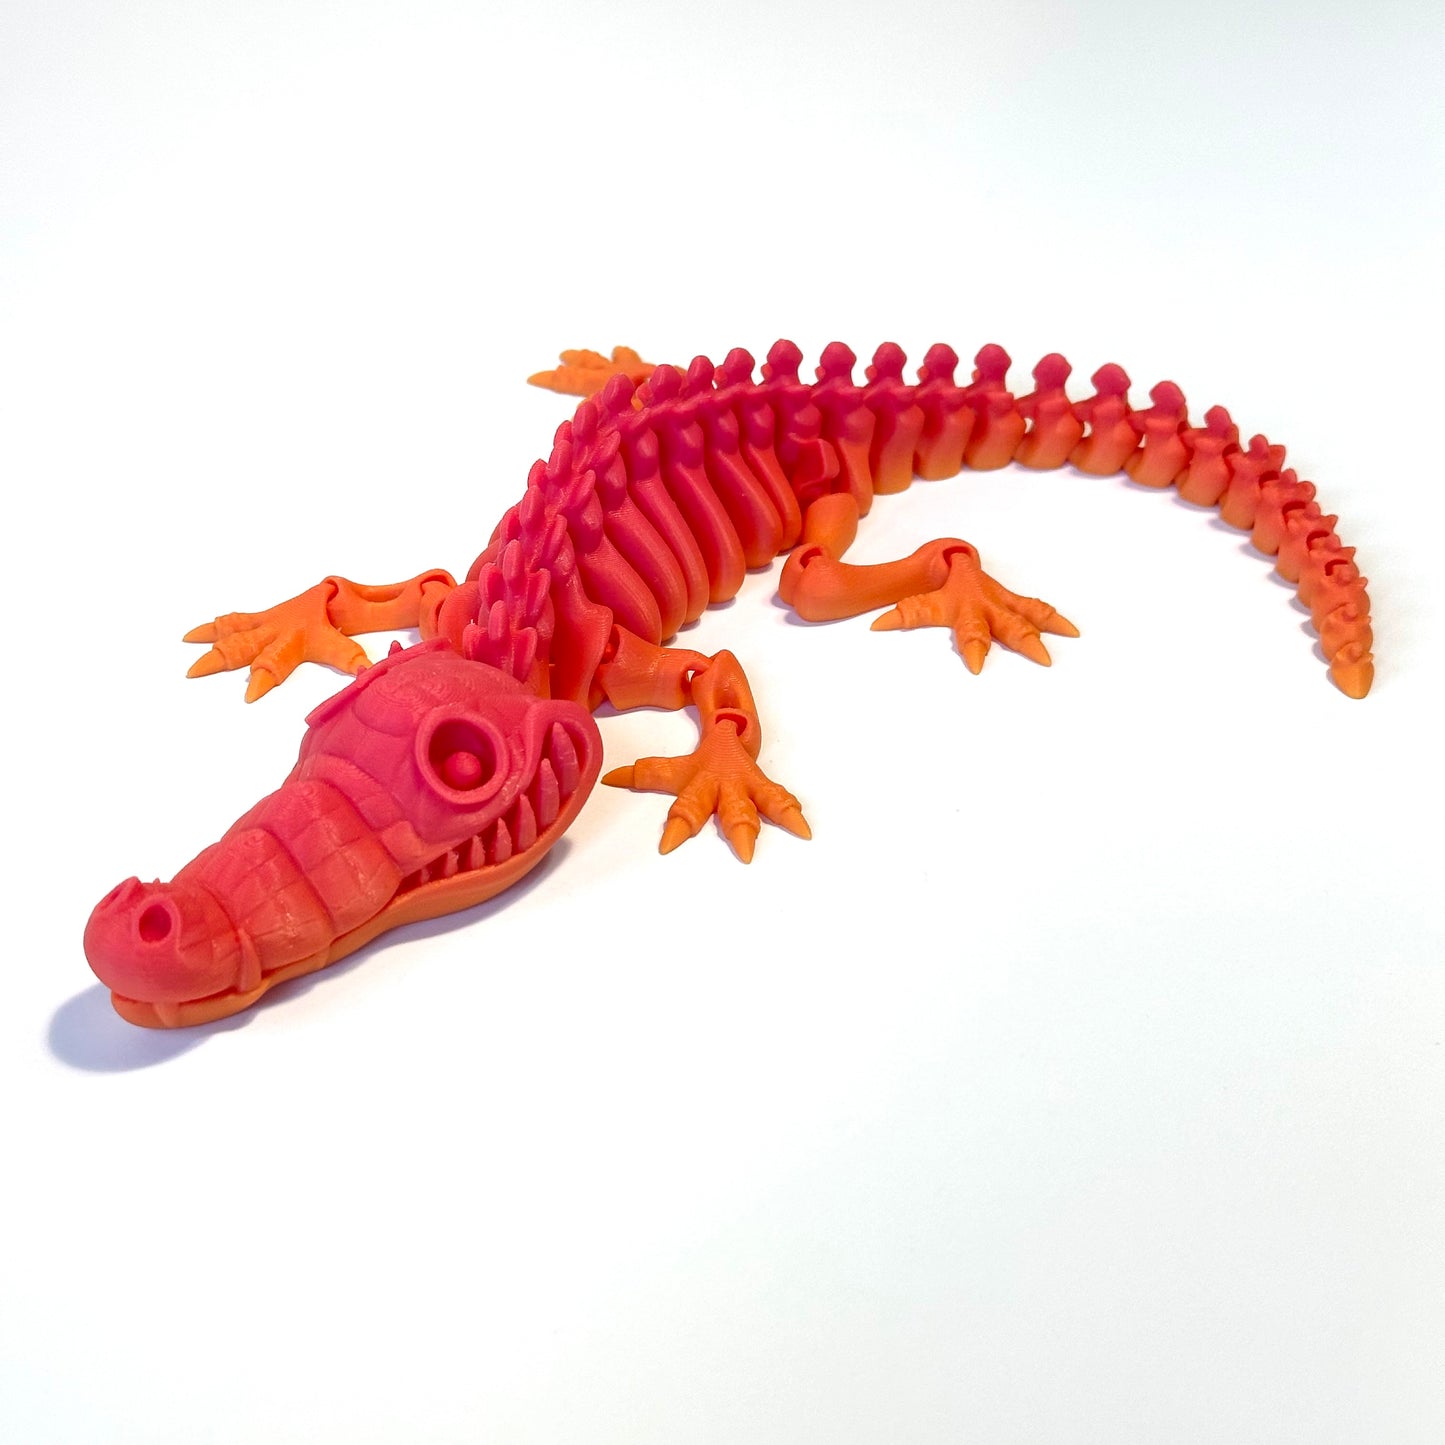 Flexible Crocodile - 3D Printed Articulating